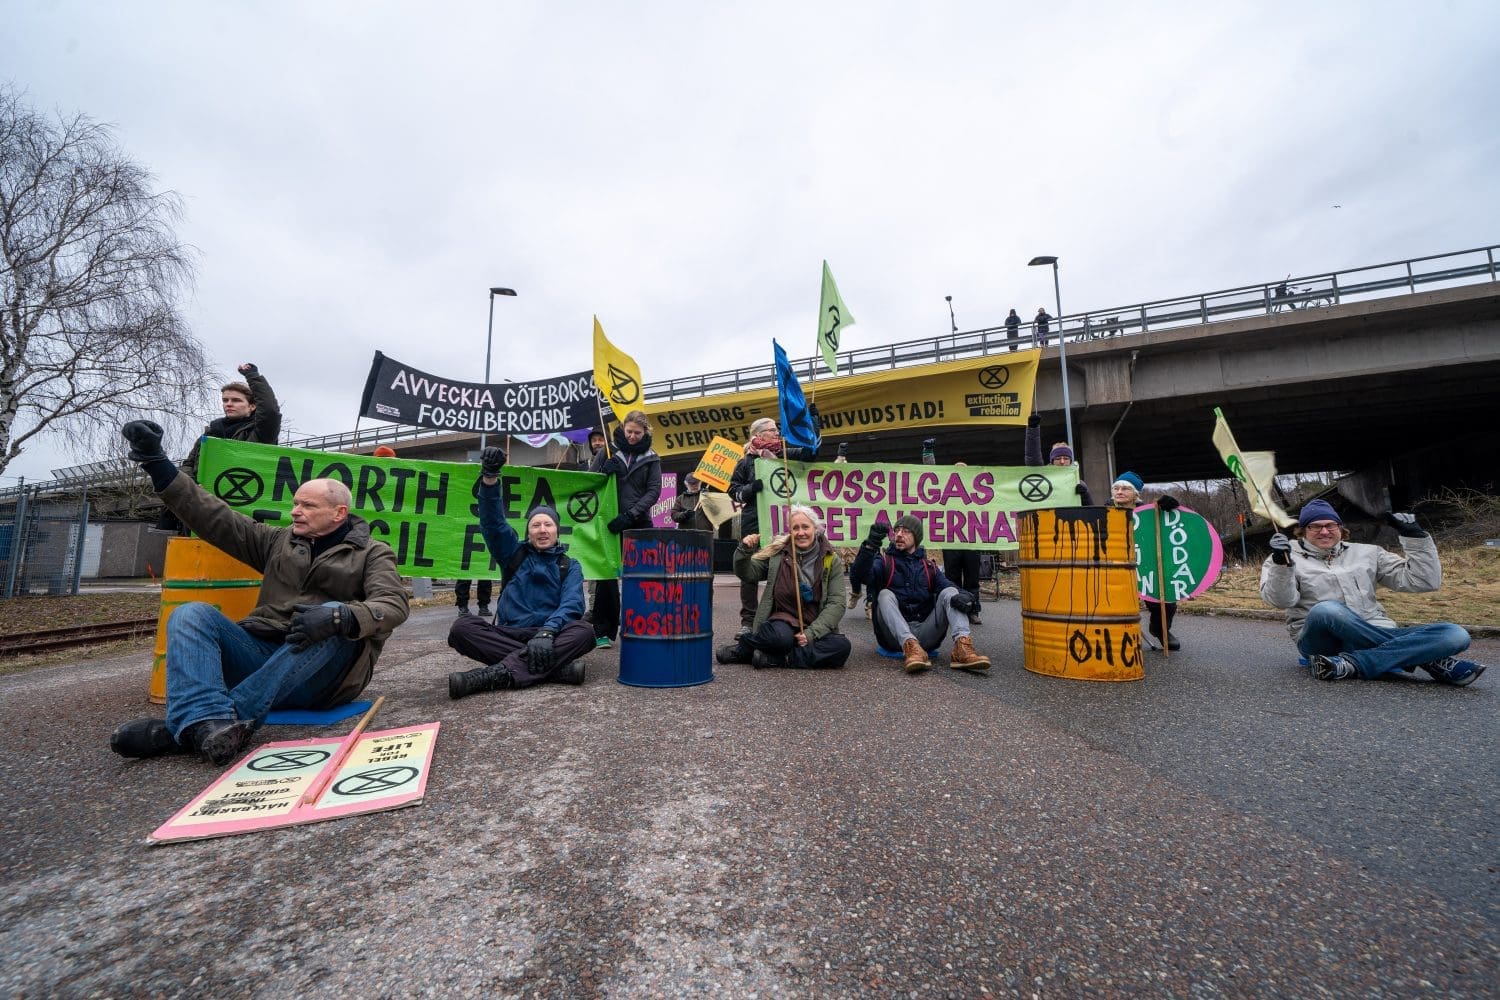 North Sea Extinction Rebellion activists blocking a road